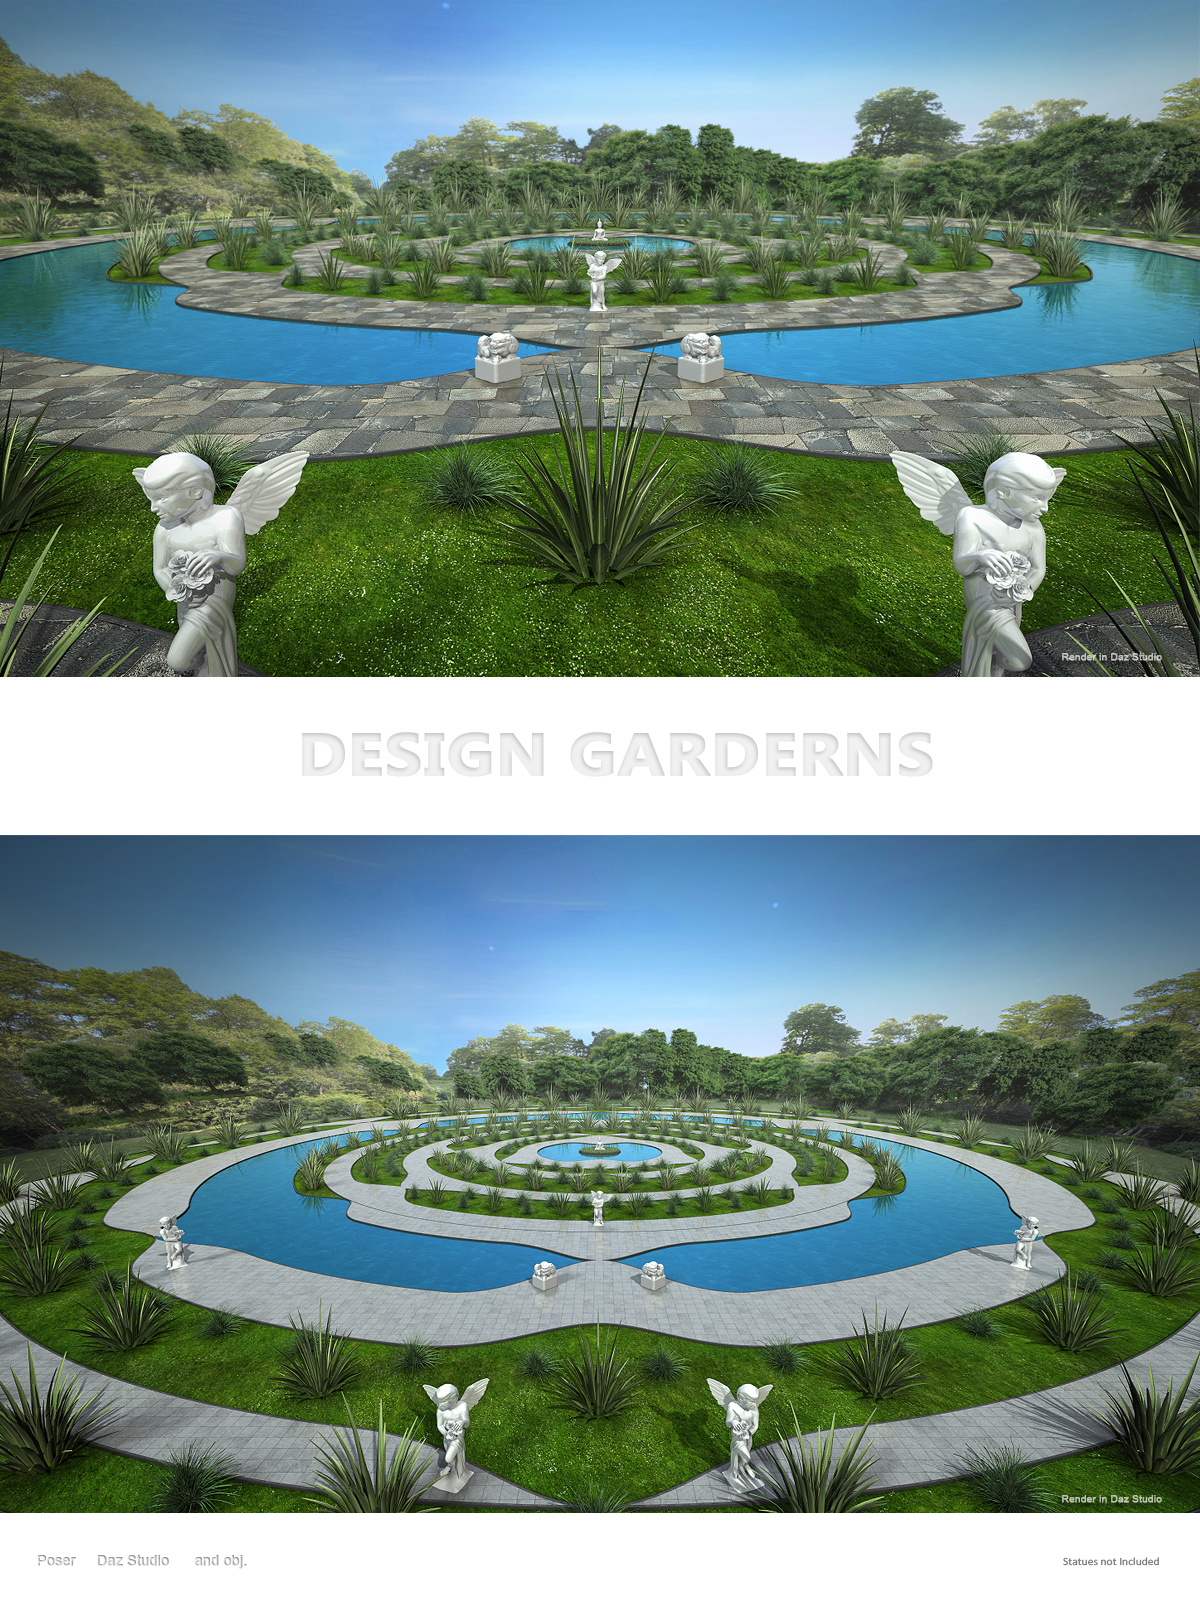 Design Gardens